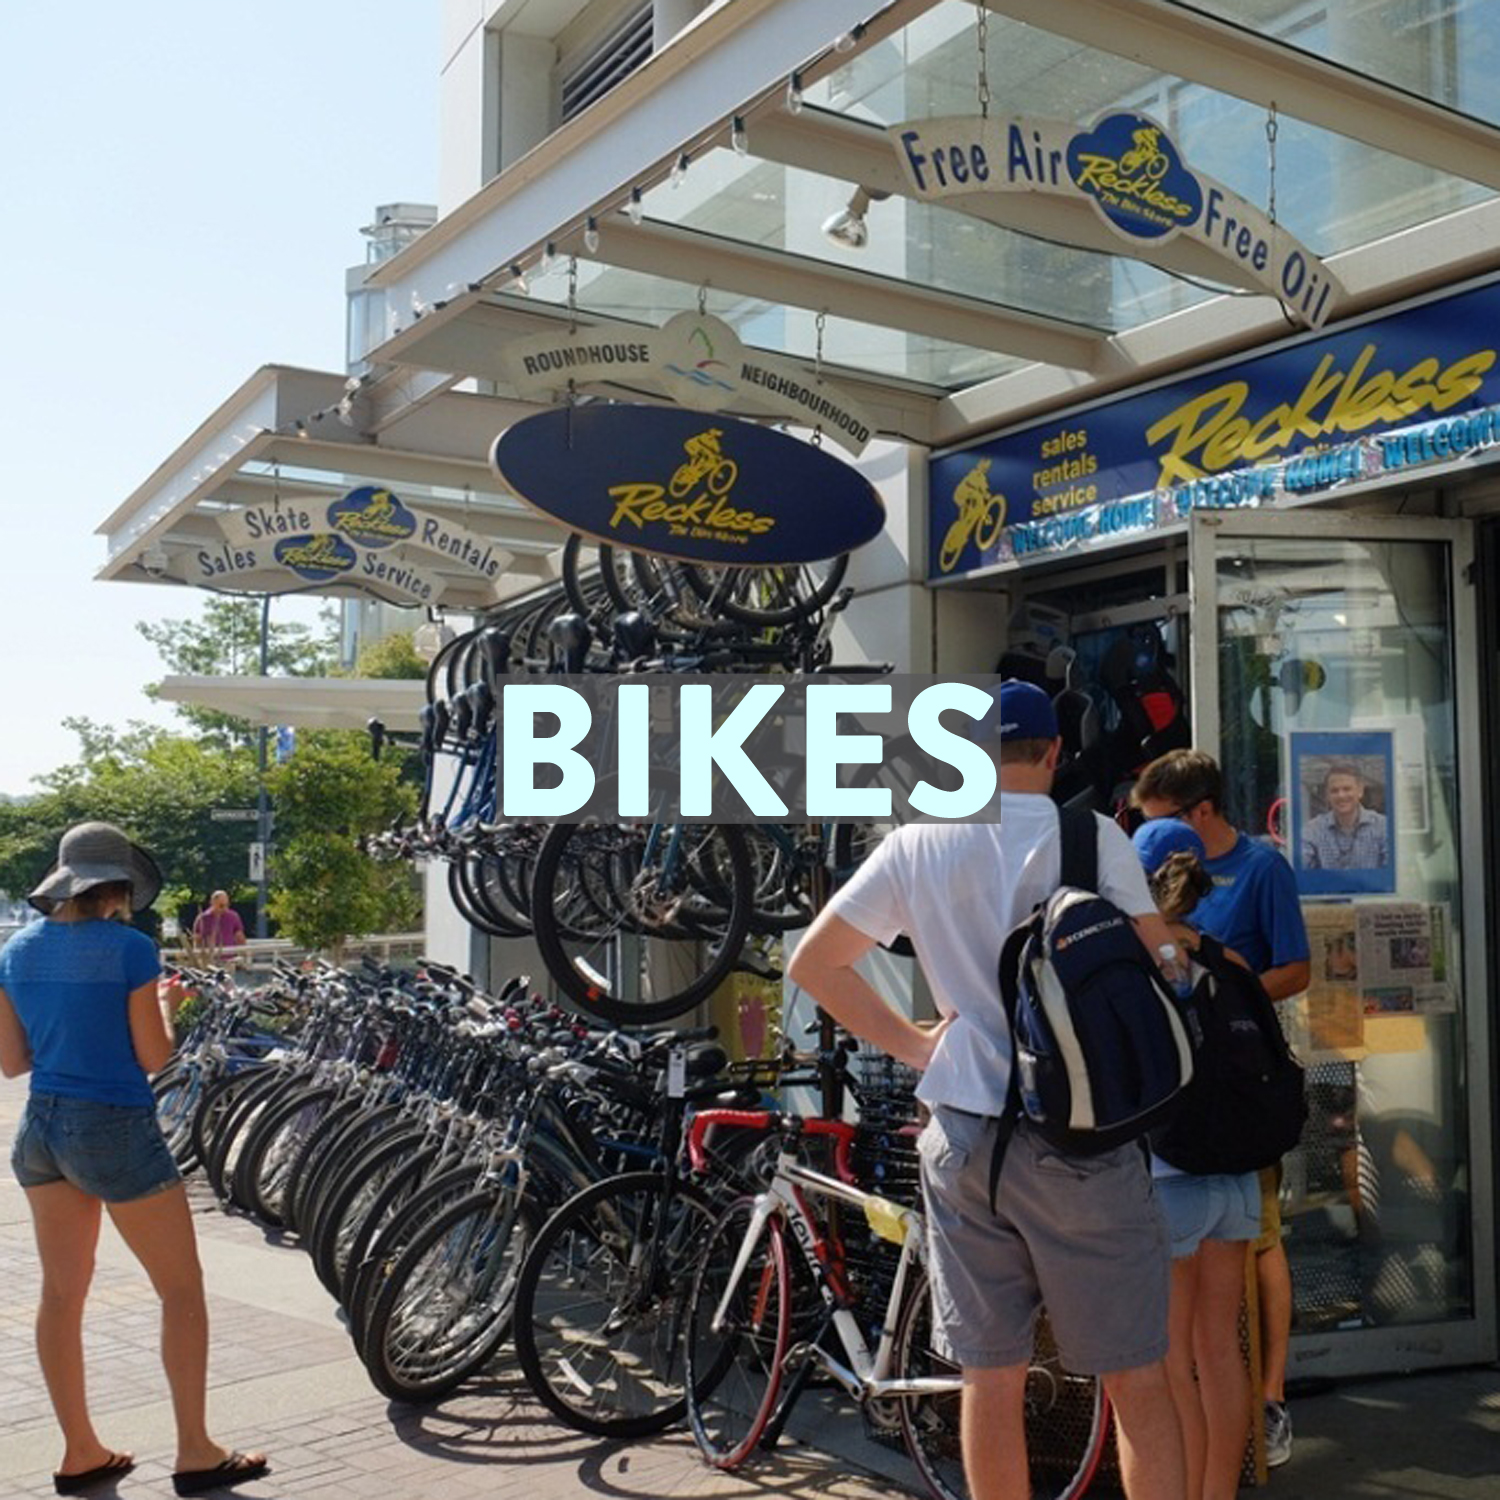 Bikabout-Vancouver-bike-rentals.jpg